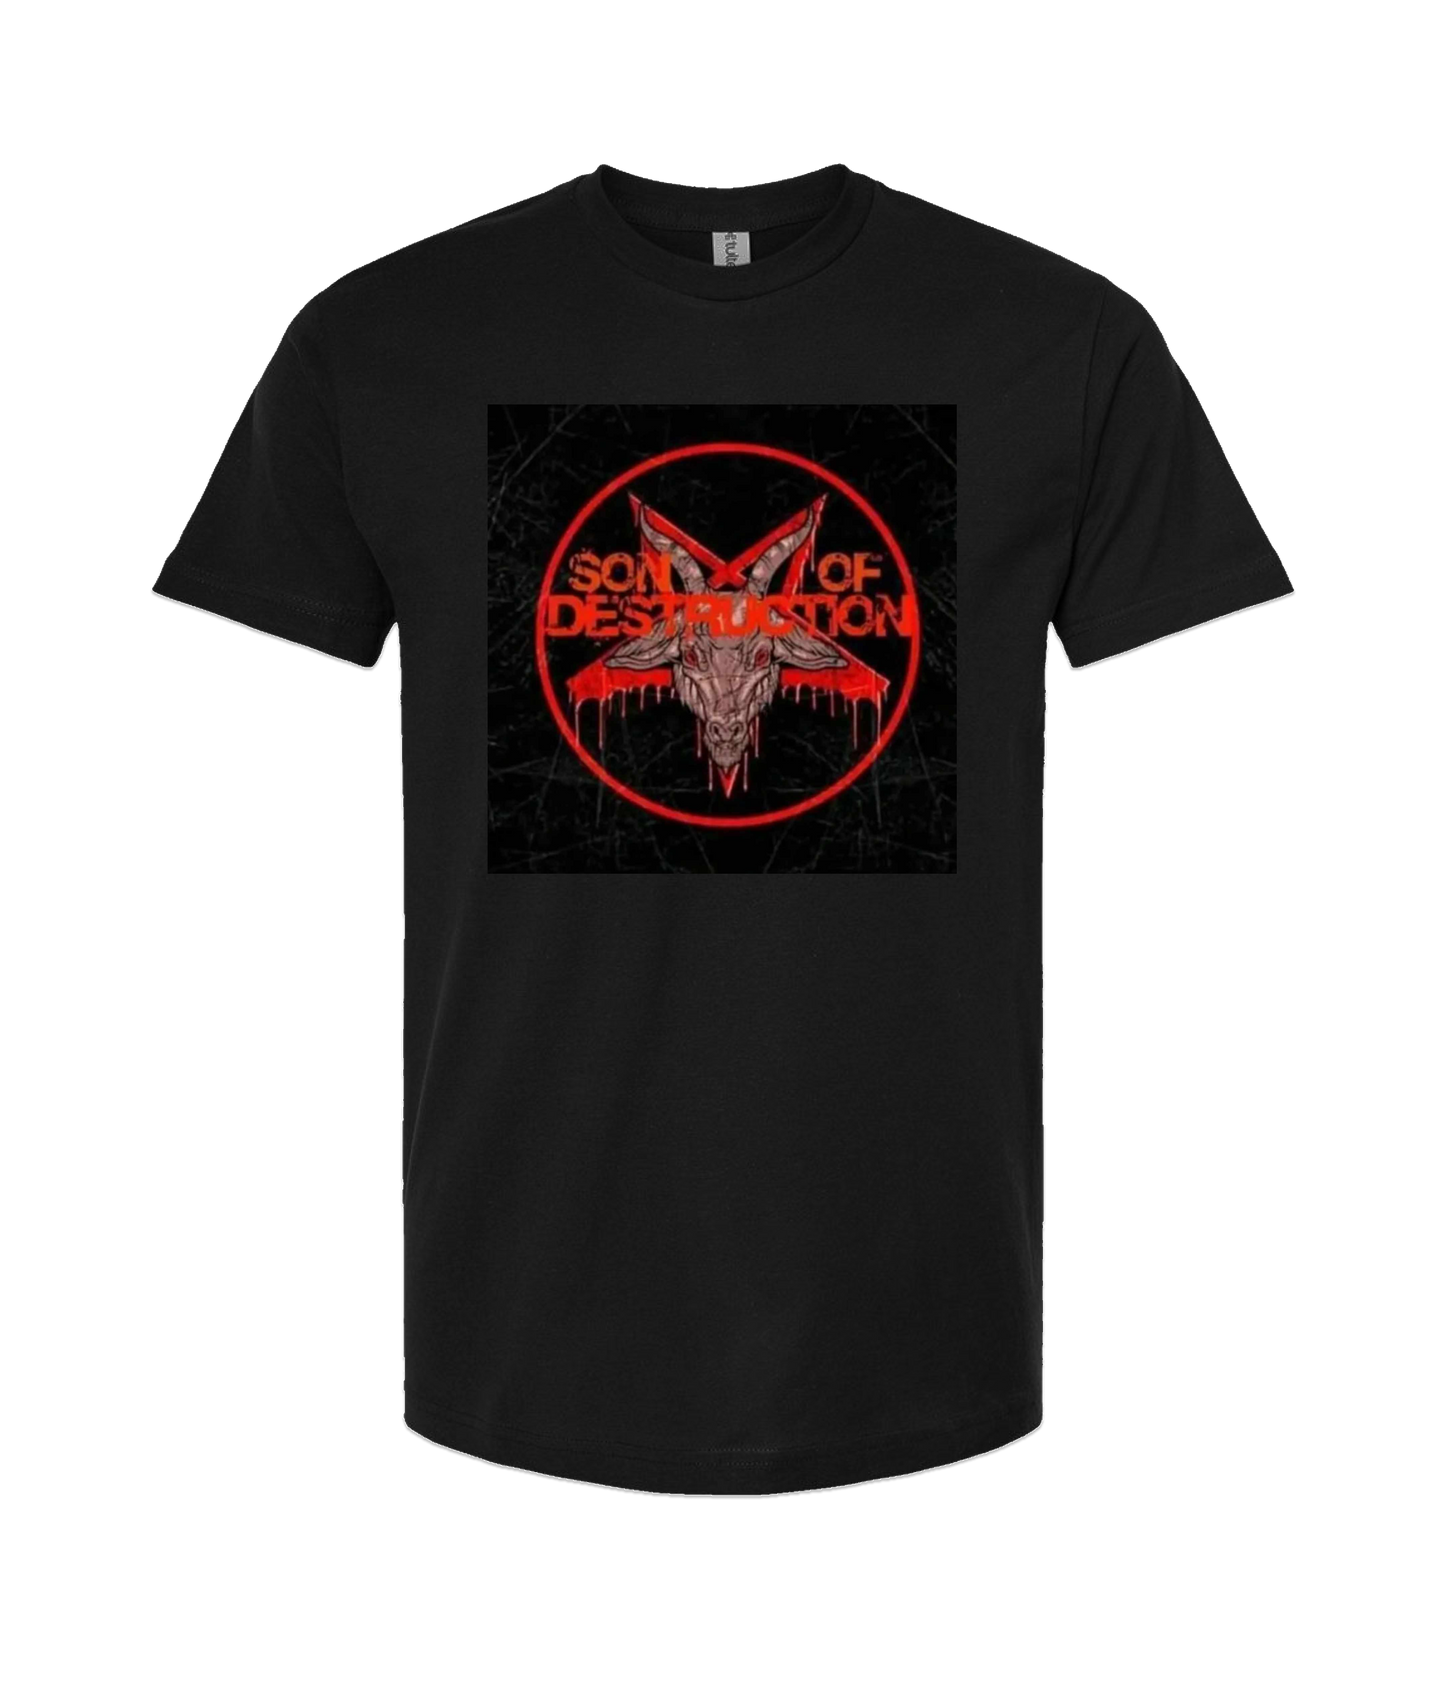 SonOfDestruction - Destruction Designed - Black T Shirt